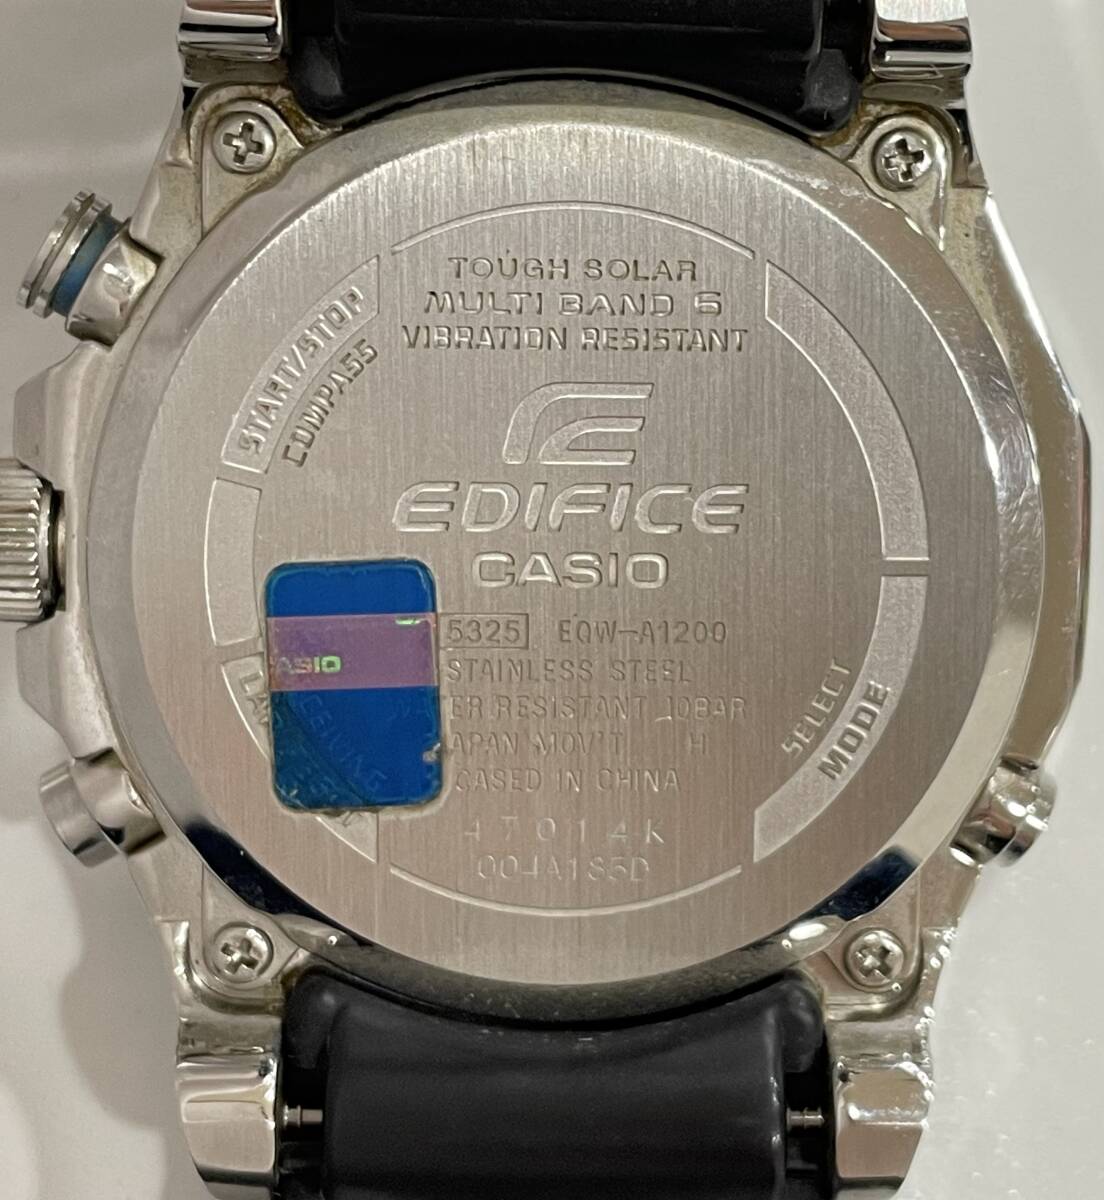 G「20172」CASIO EDIFICE カシオ エディフィス EQW-A1200 腕時計 タフソーラー 箱付き_画像5